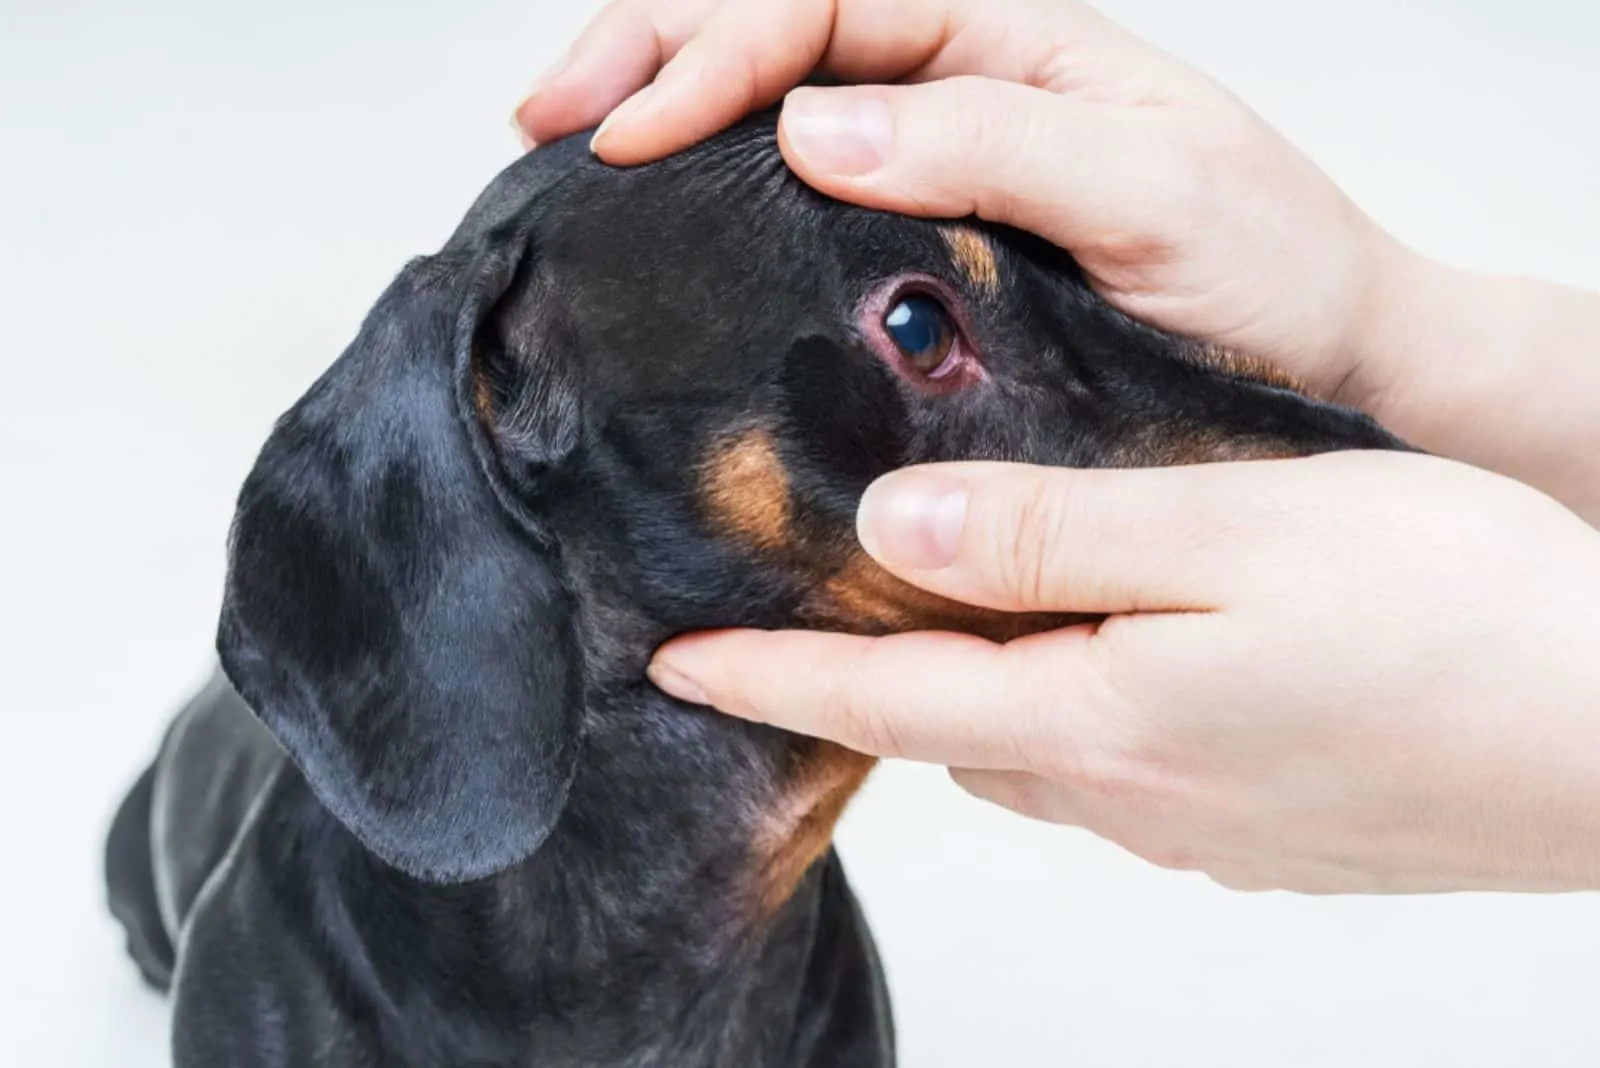 a woman examines a dog's eye